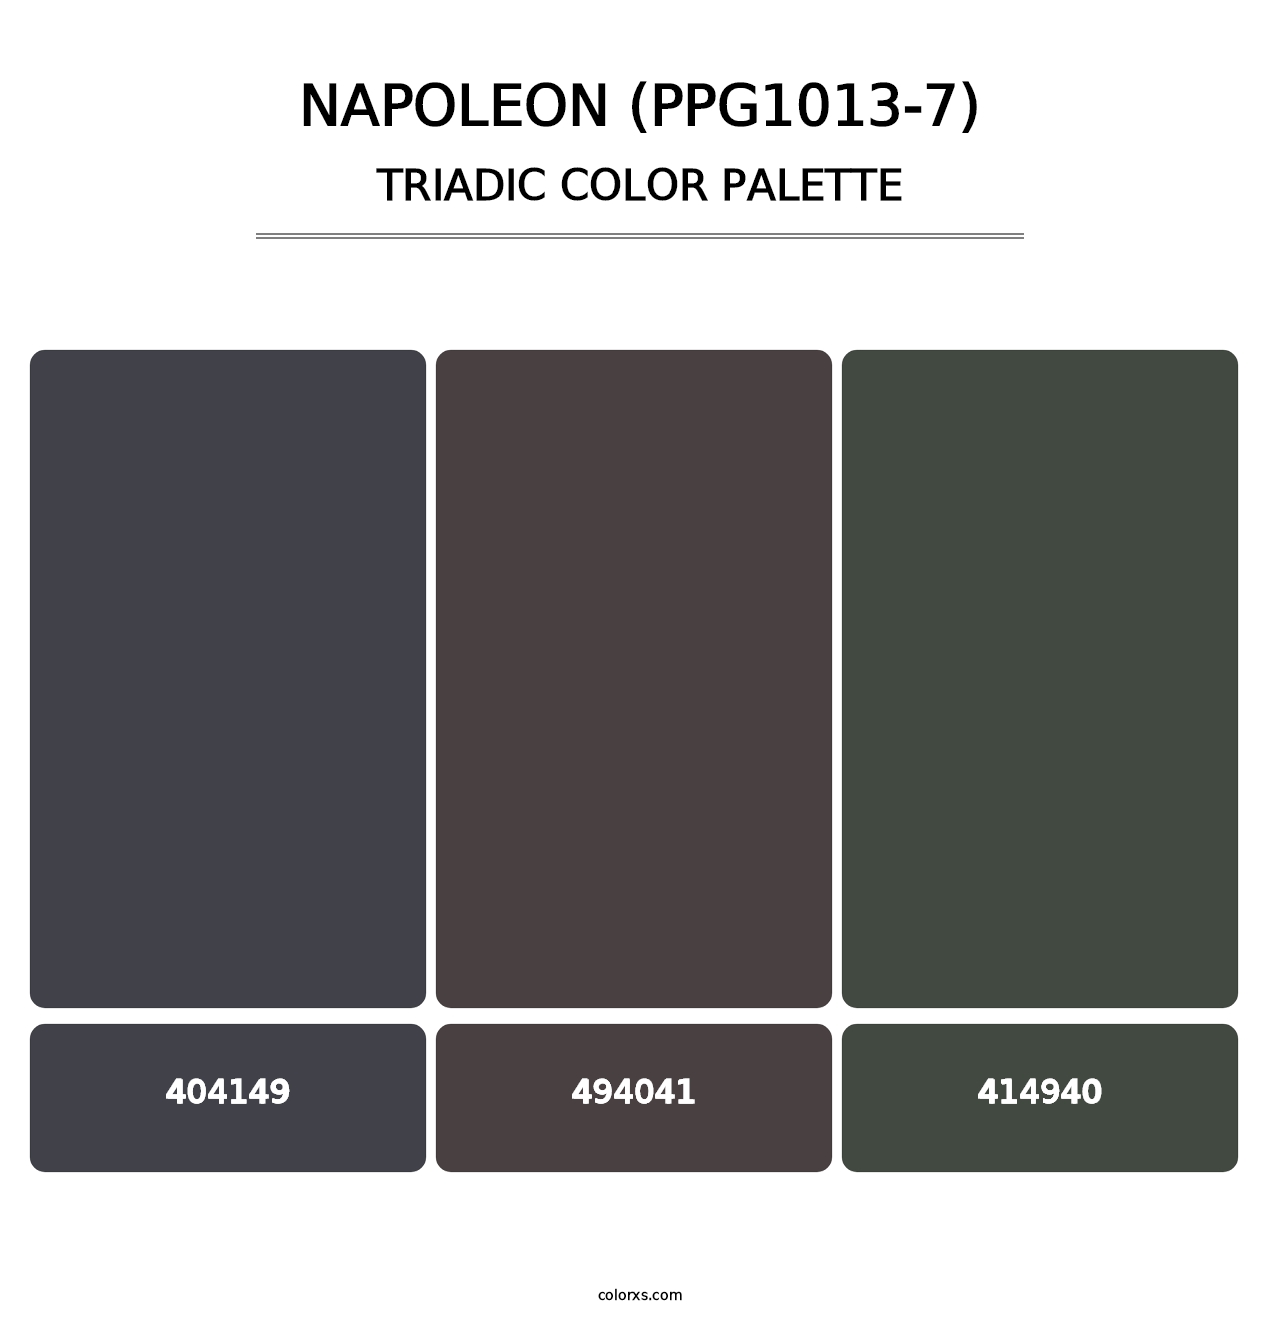 Napoleon (PPG1013-7) - Triadic Color Palette